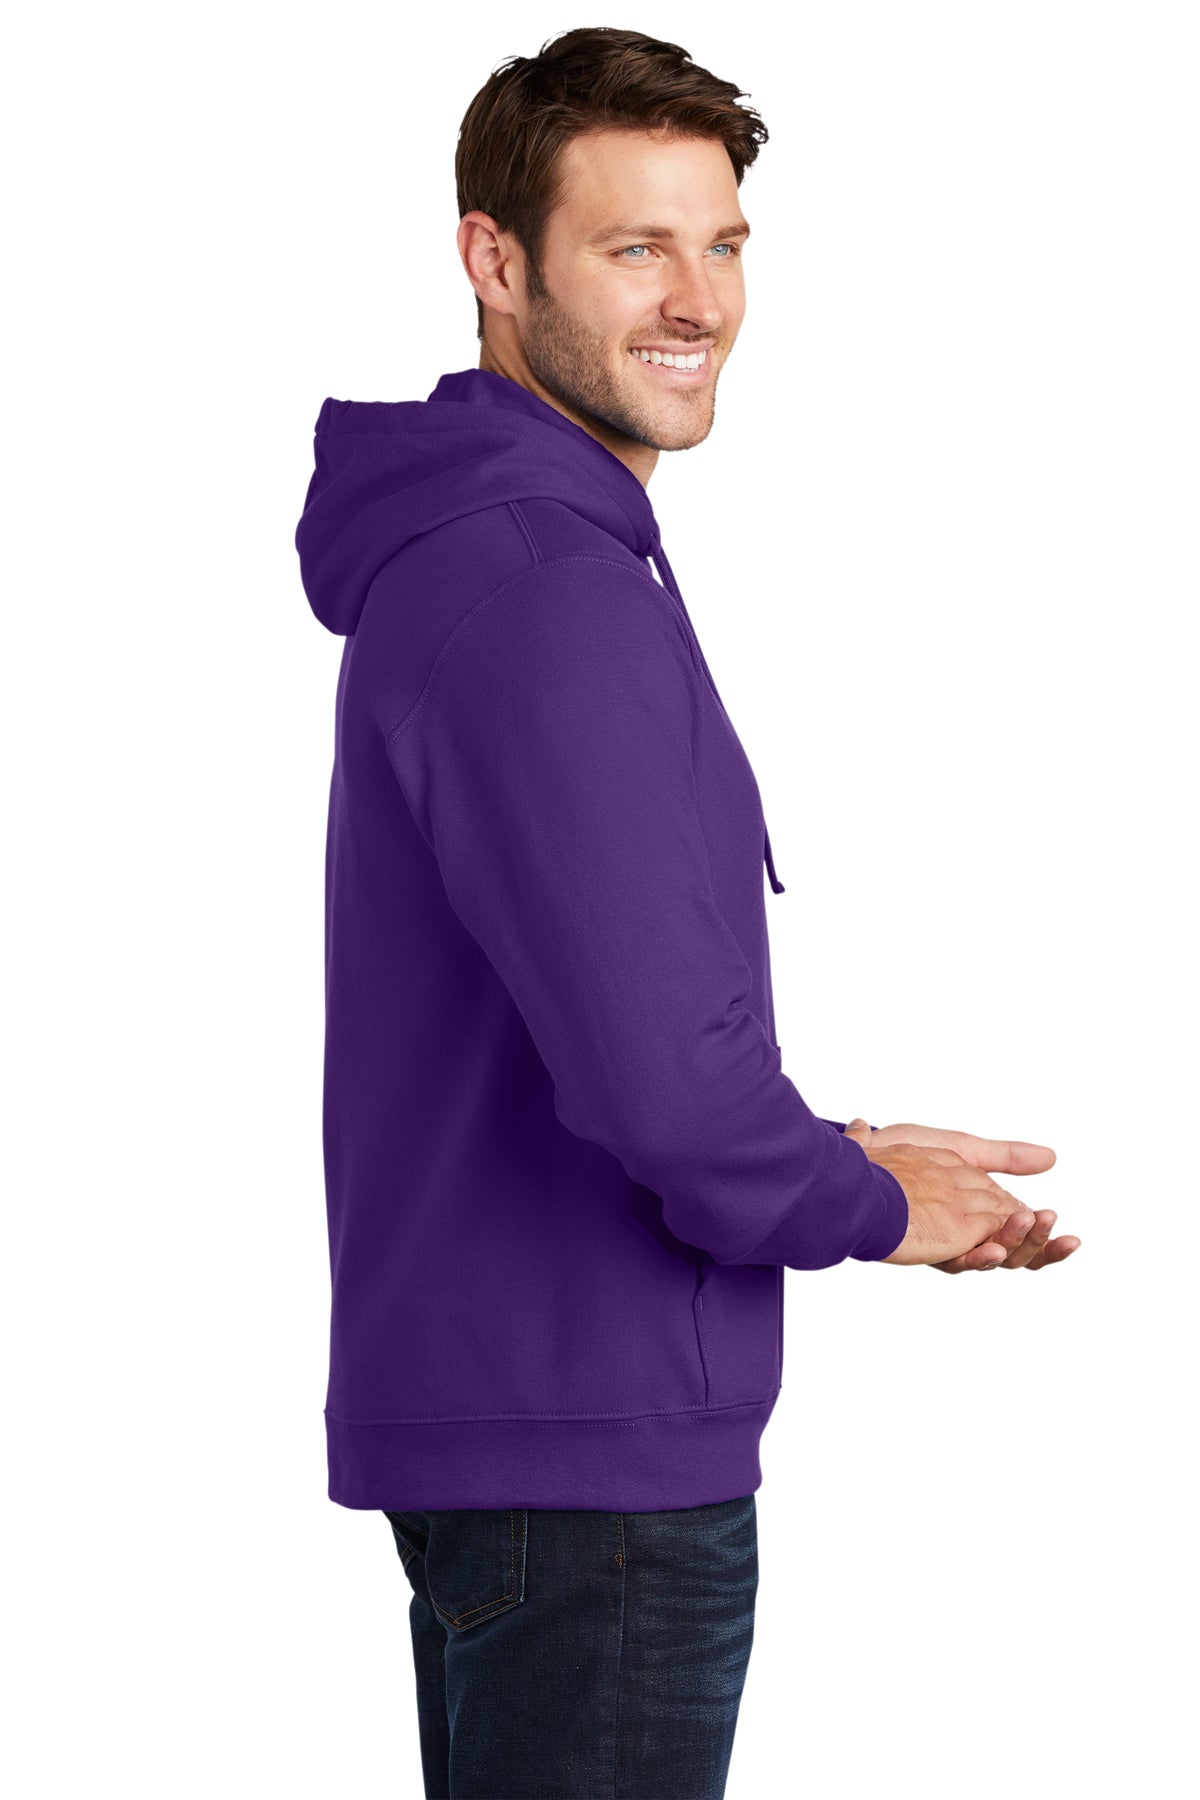 port & company_pc850h _team purple_company_logo_sweatshirts